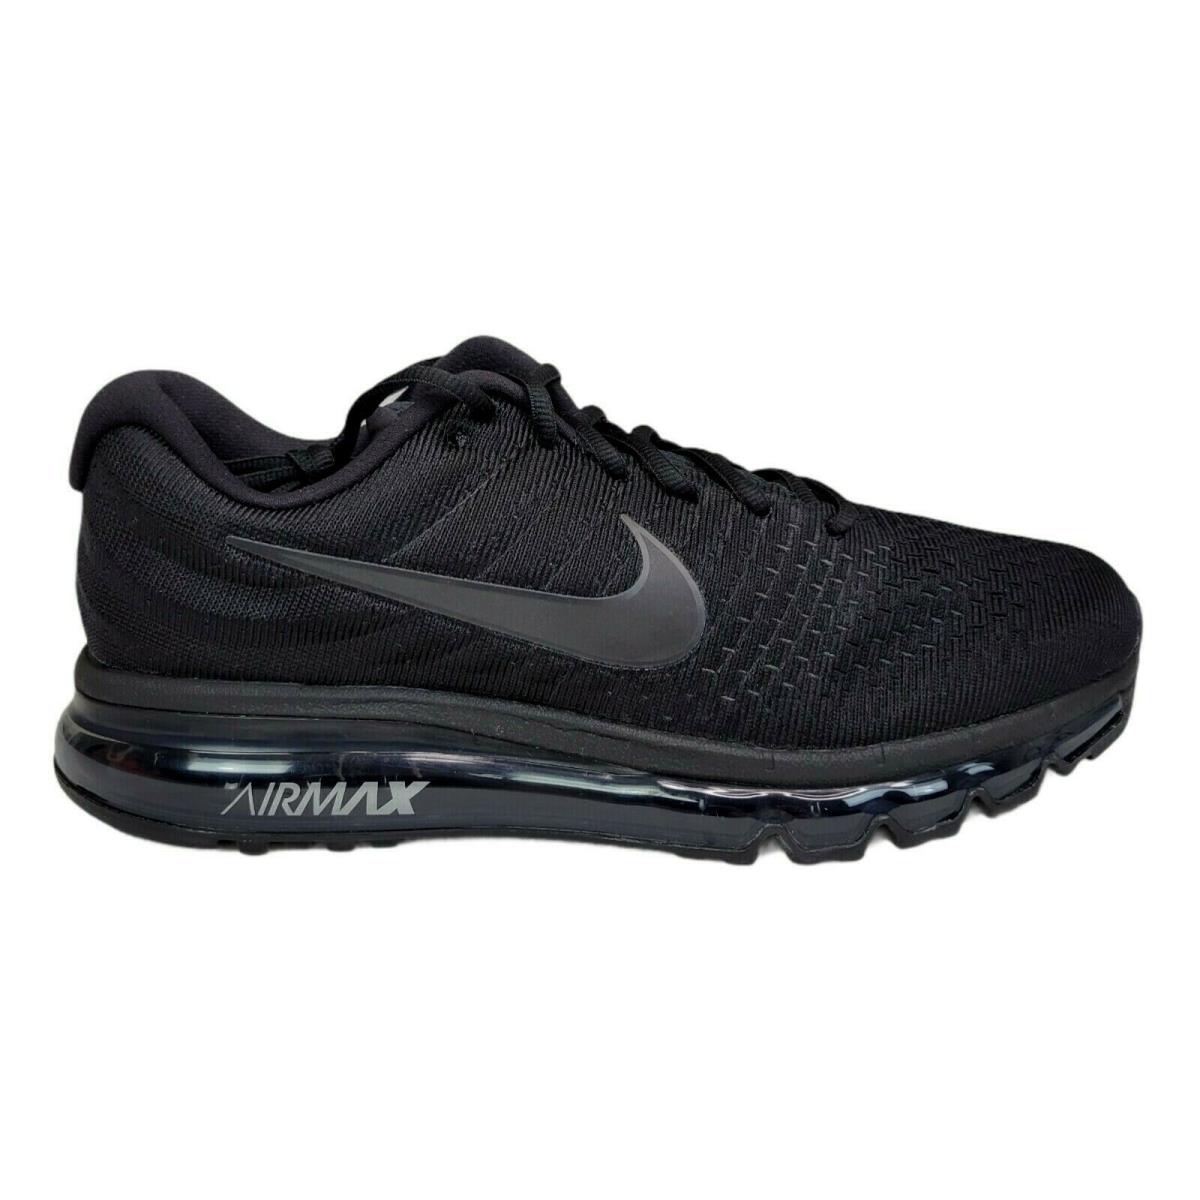 Nike Mens 9 or 9.5 Air Max 2017 Triple Black Running Shoes Sneakers 849559-004 - Black